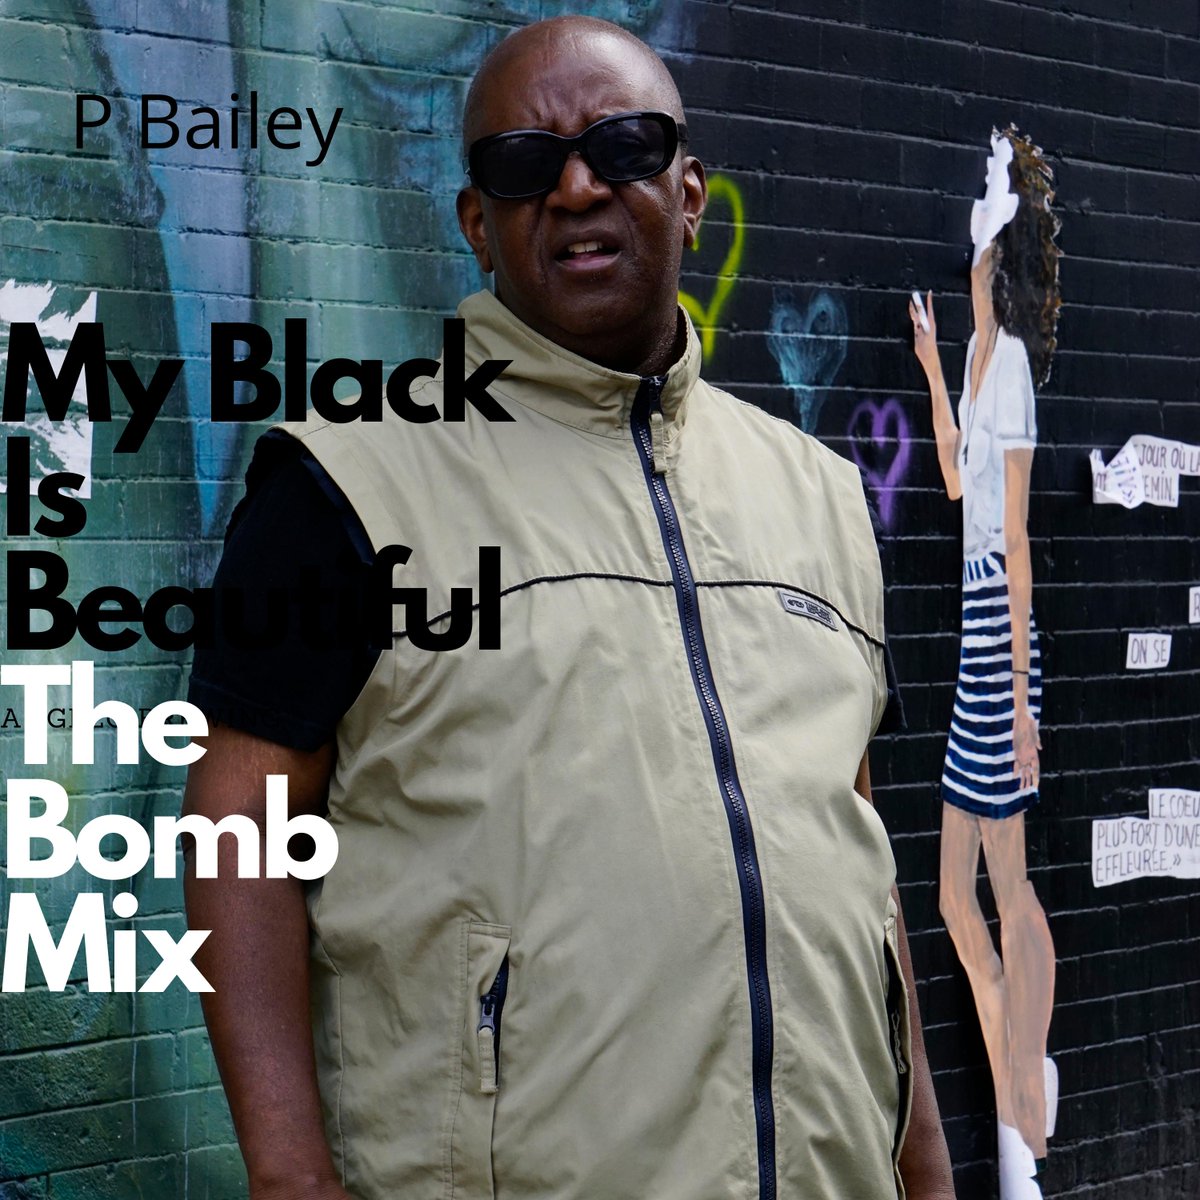 #Blackhistorymonth #presents #myblackisbeautiful #bombmix #PBailey #artist #songwriter #selfproduced #label #pcbrecordings #rnb #funk #alternativesoul #jamesbrown #donnyhathaway #steviwwonder #michaeljackson #february #2023